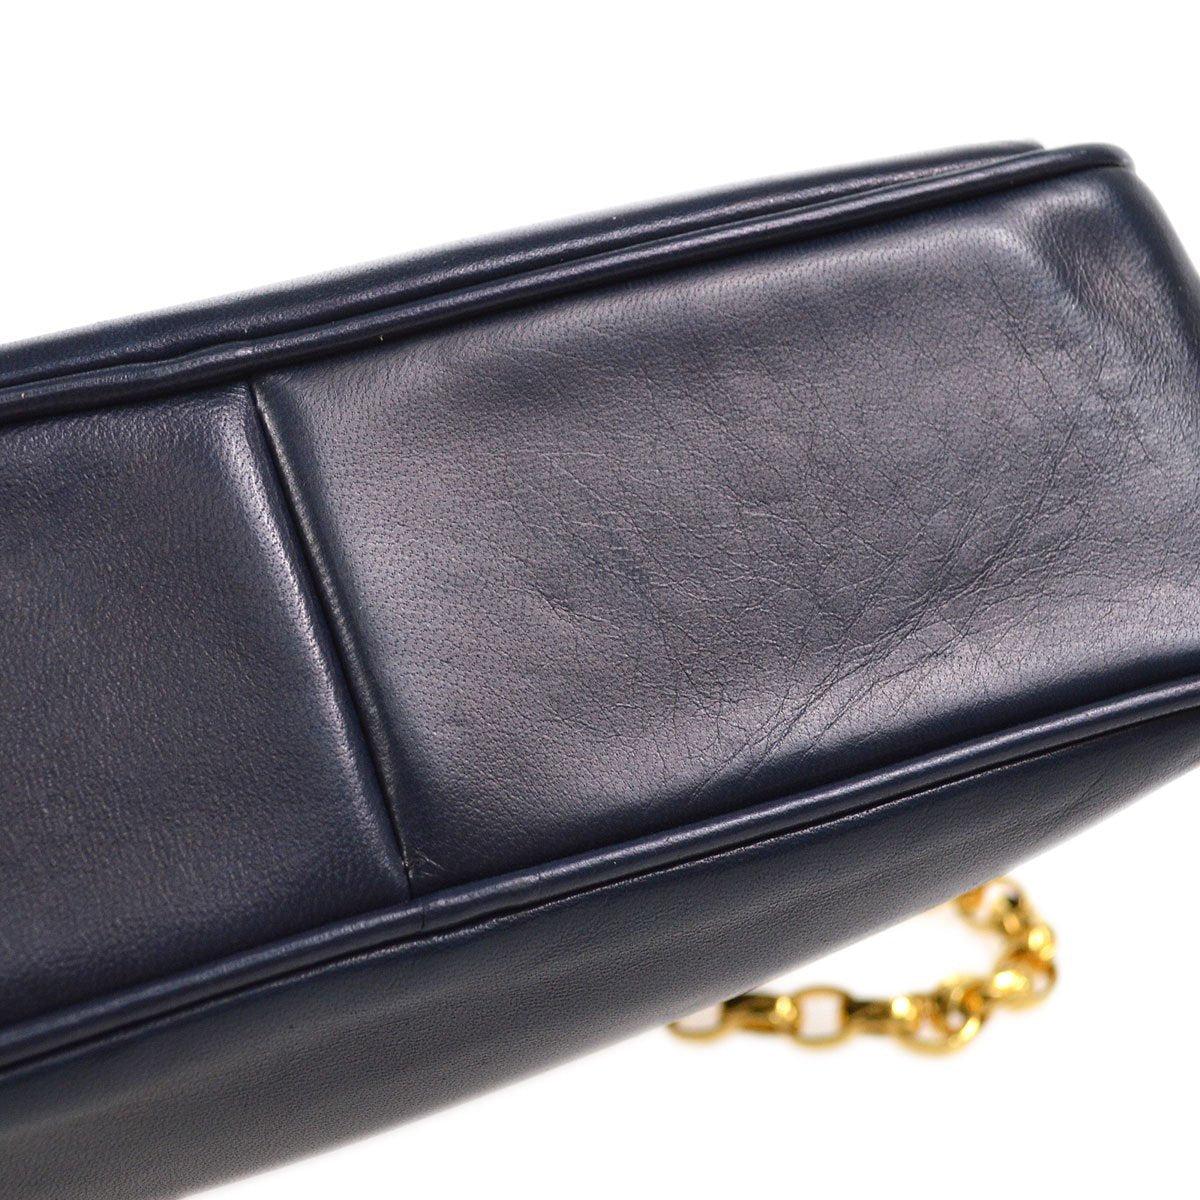 Black CHANEL Navy Blue White Trim Leather Gold Small Evening Camera Shoulder Bag